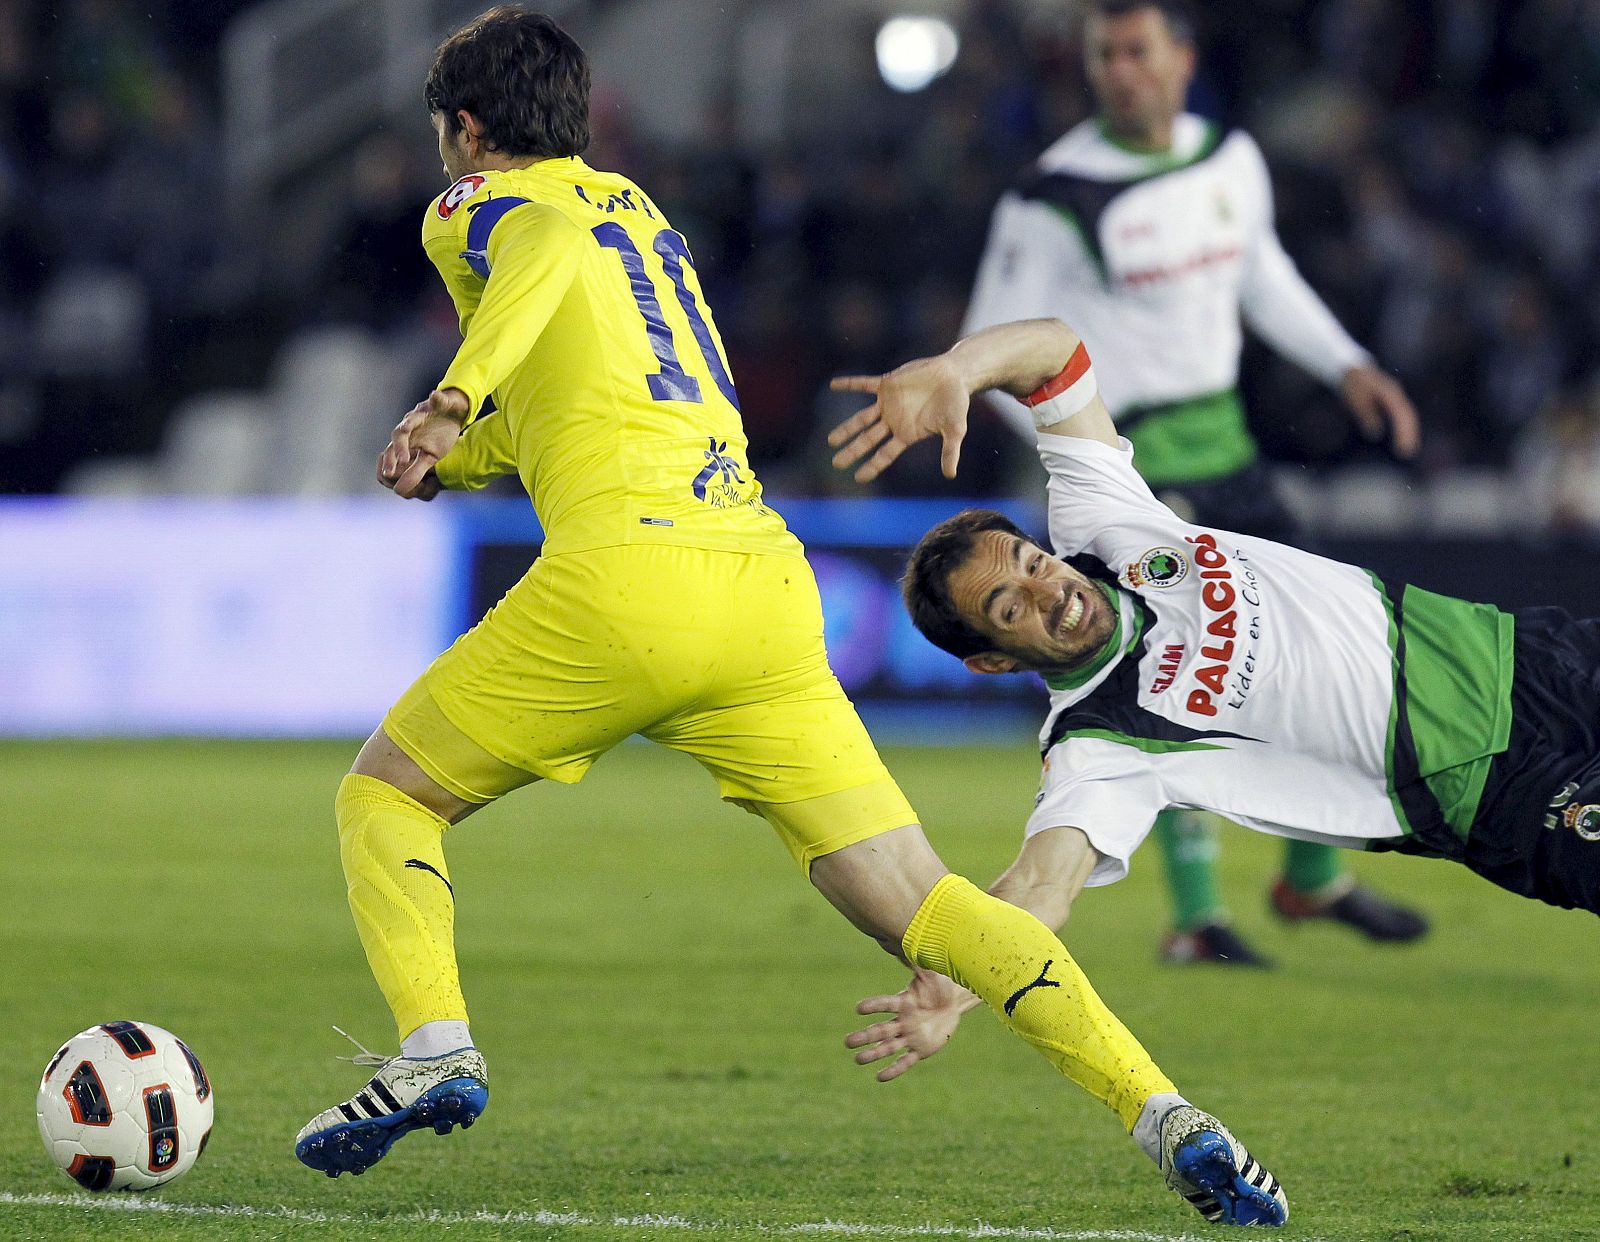 Pedro Munitis cae ante el centrocampista del Villarreal Rubén Gracia "Cani".